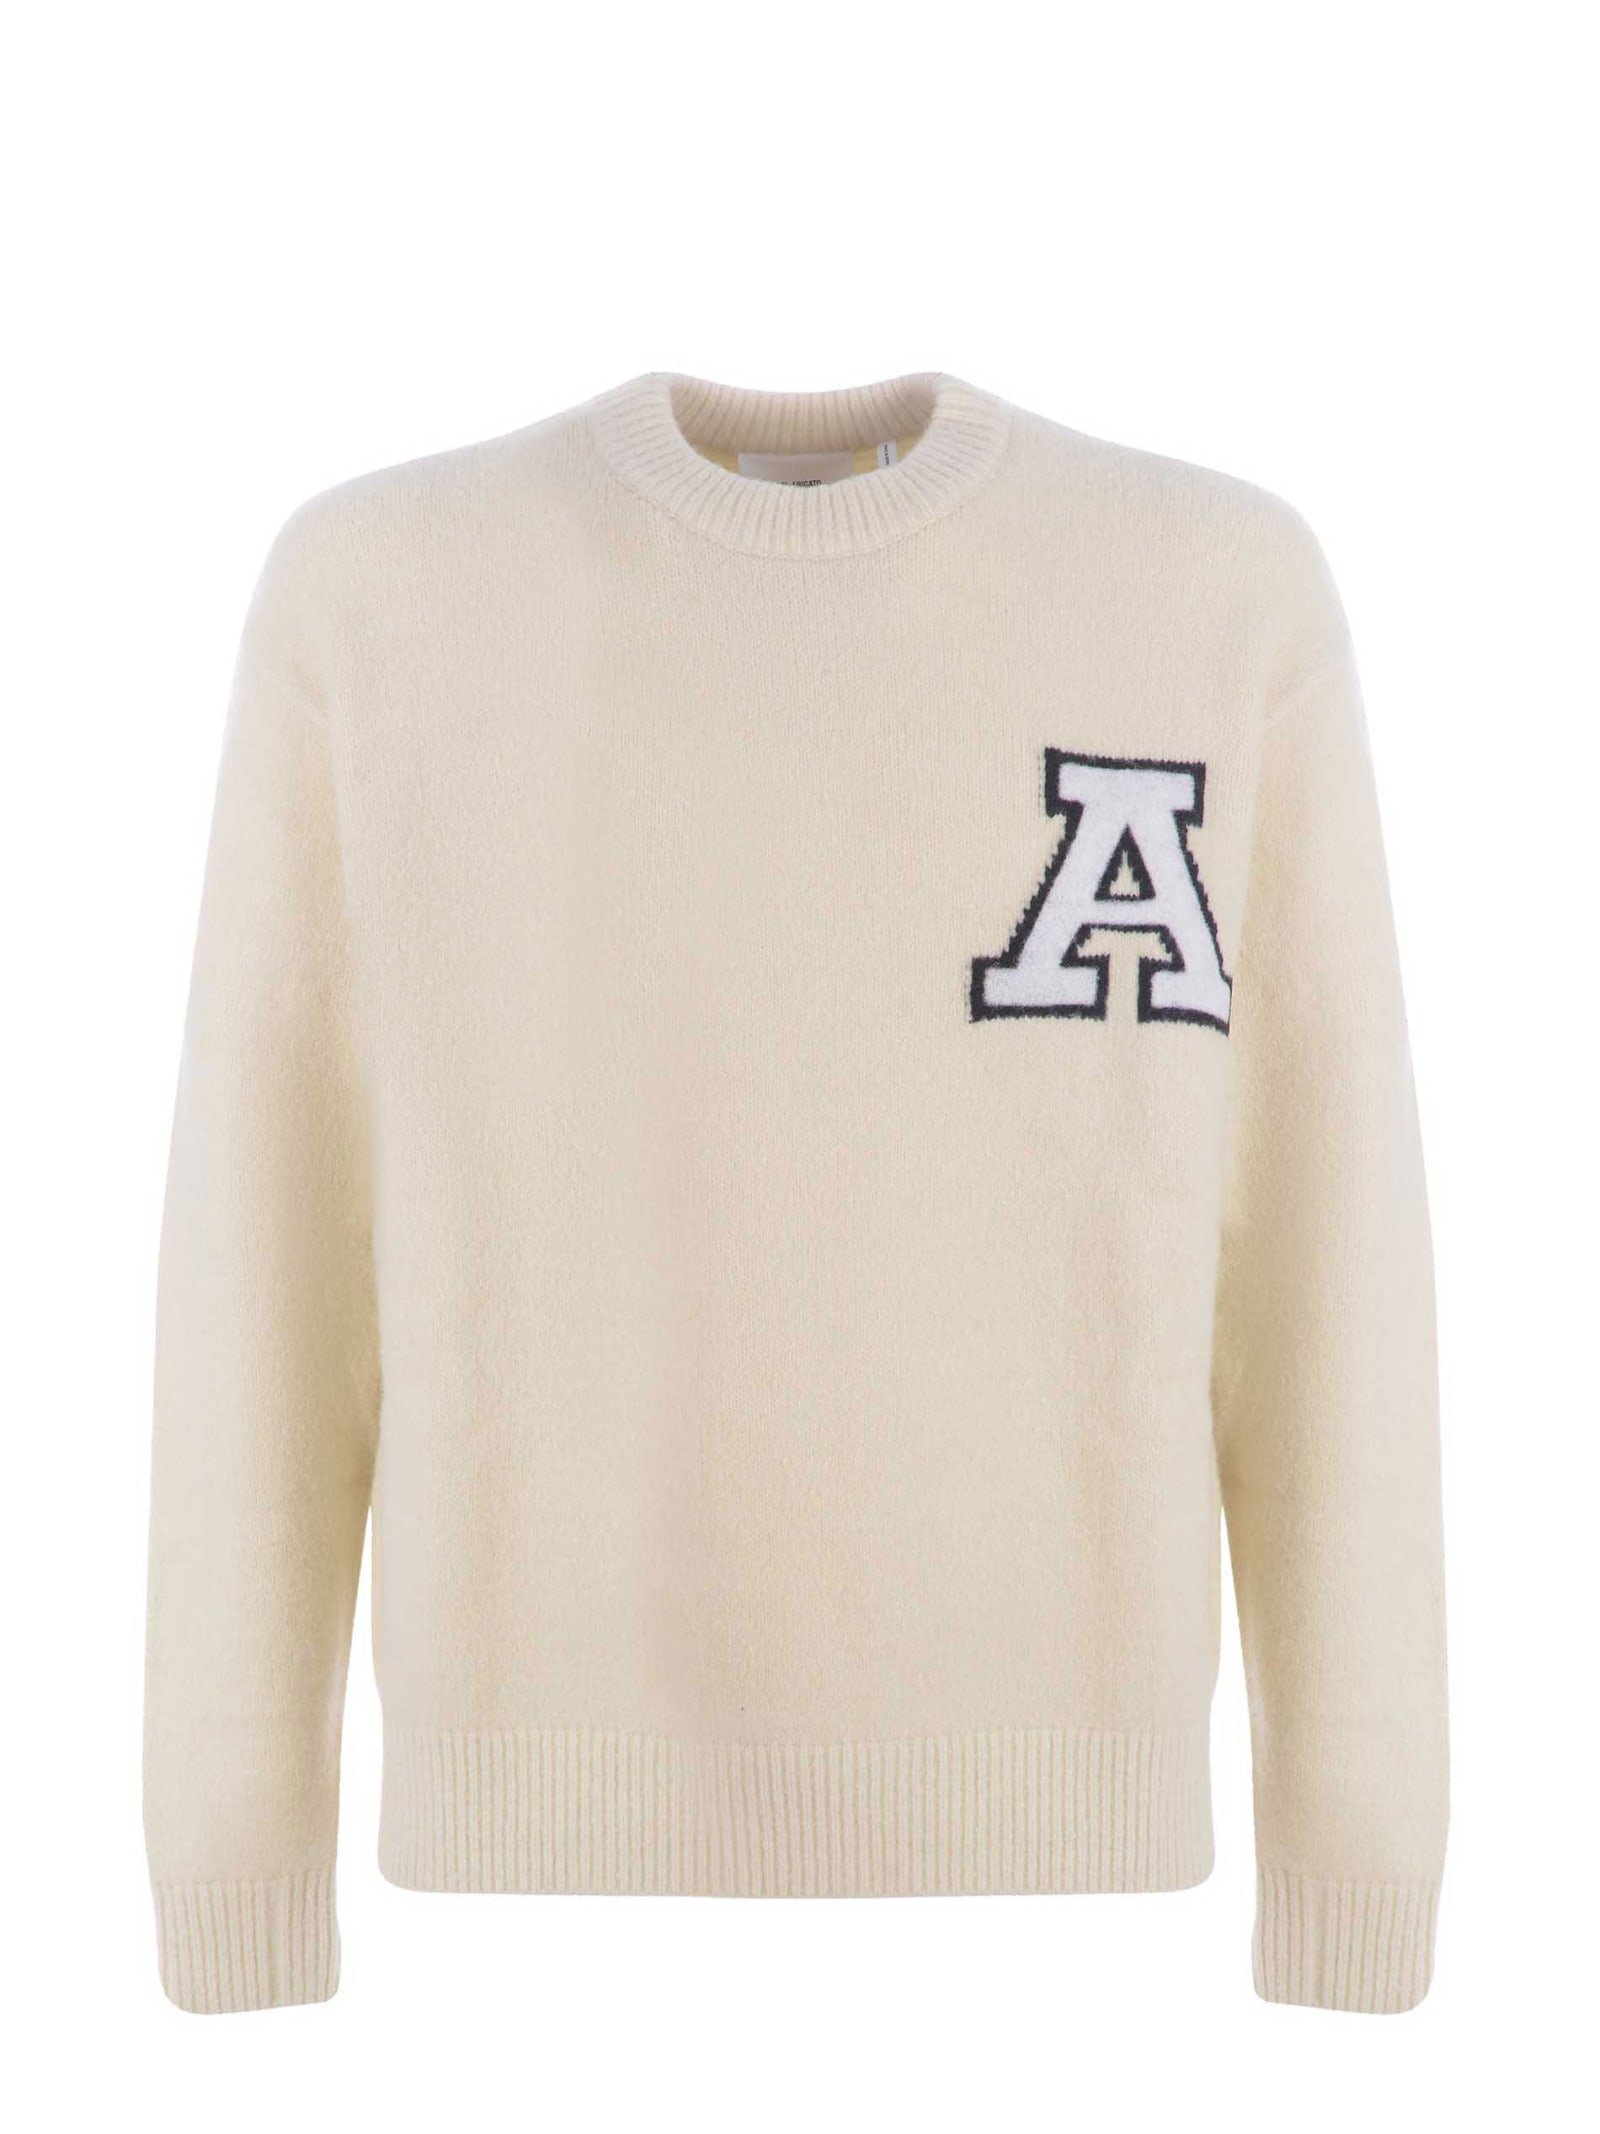 Sweater Axel Arigato team In Wool Blend